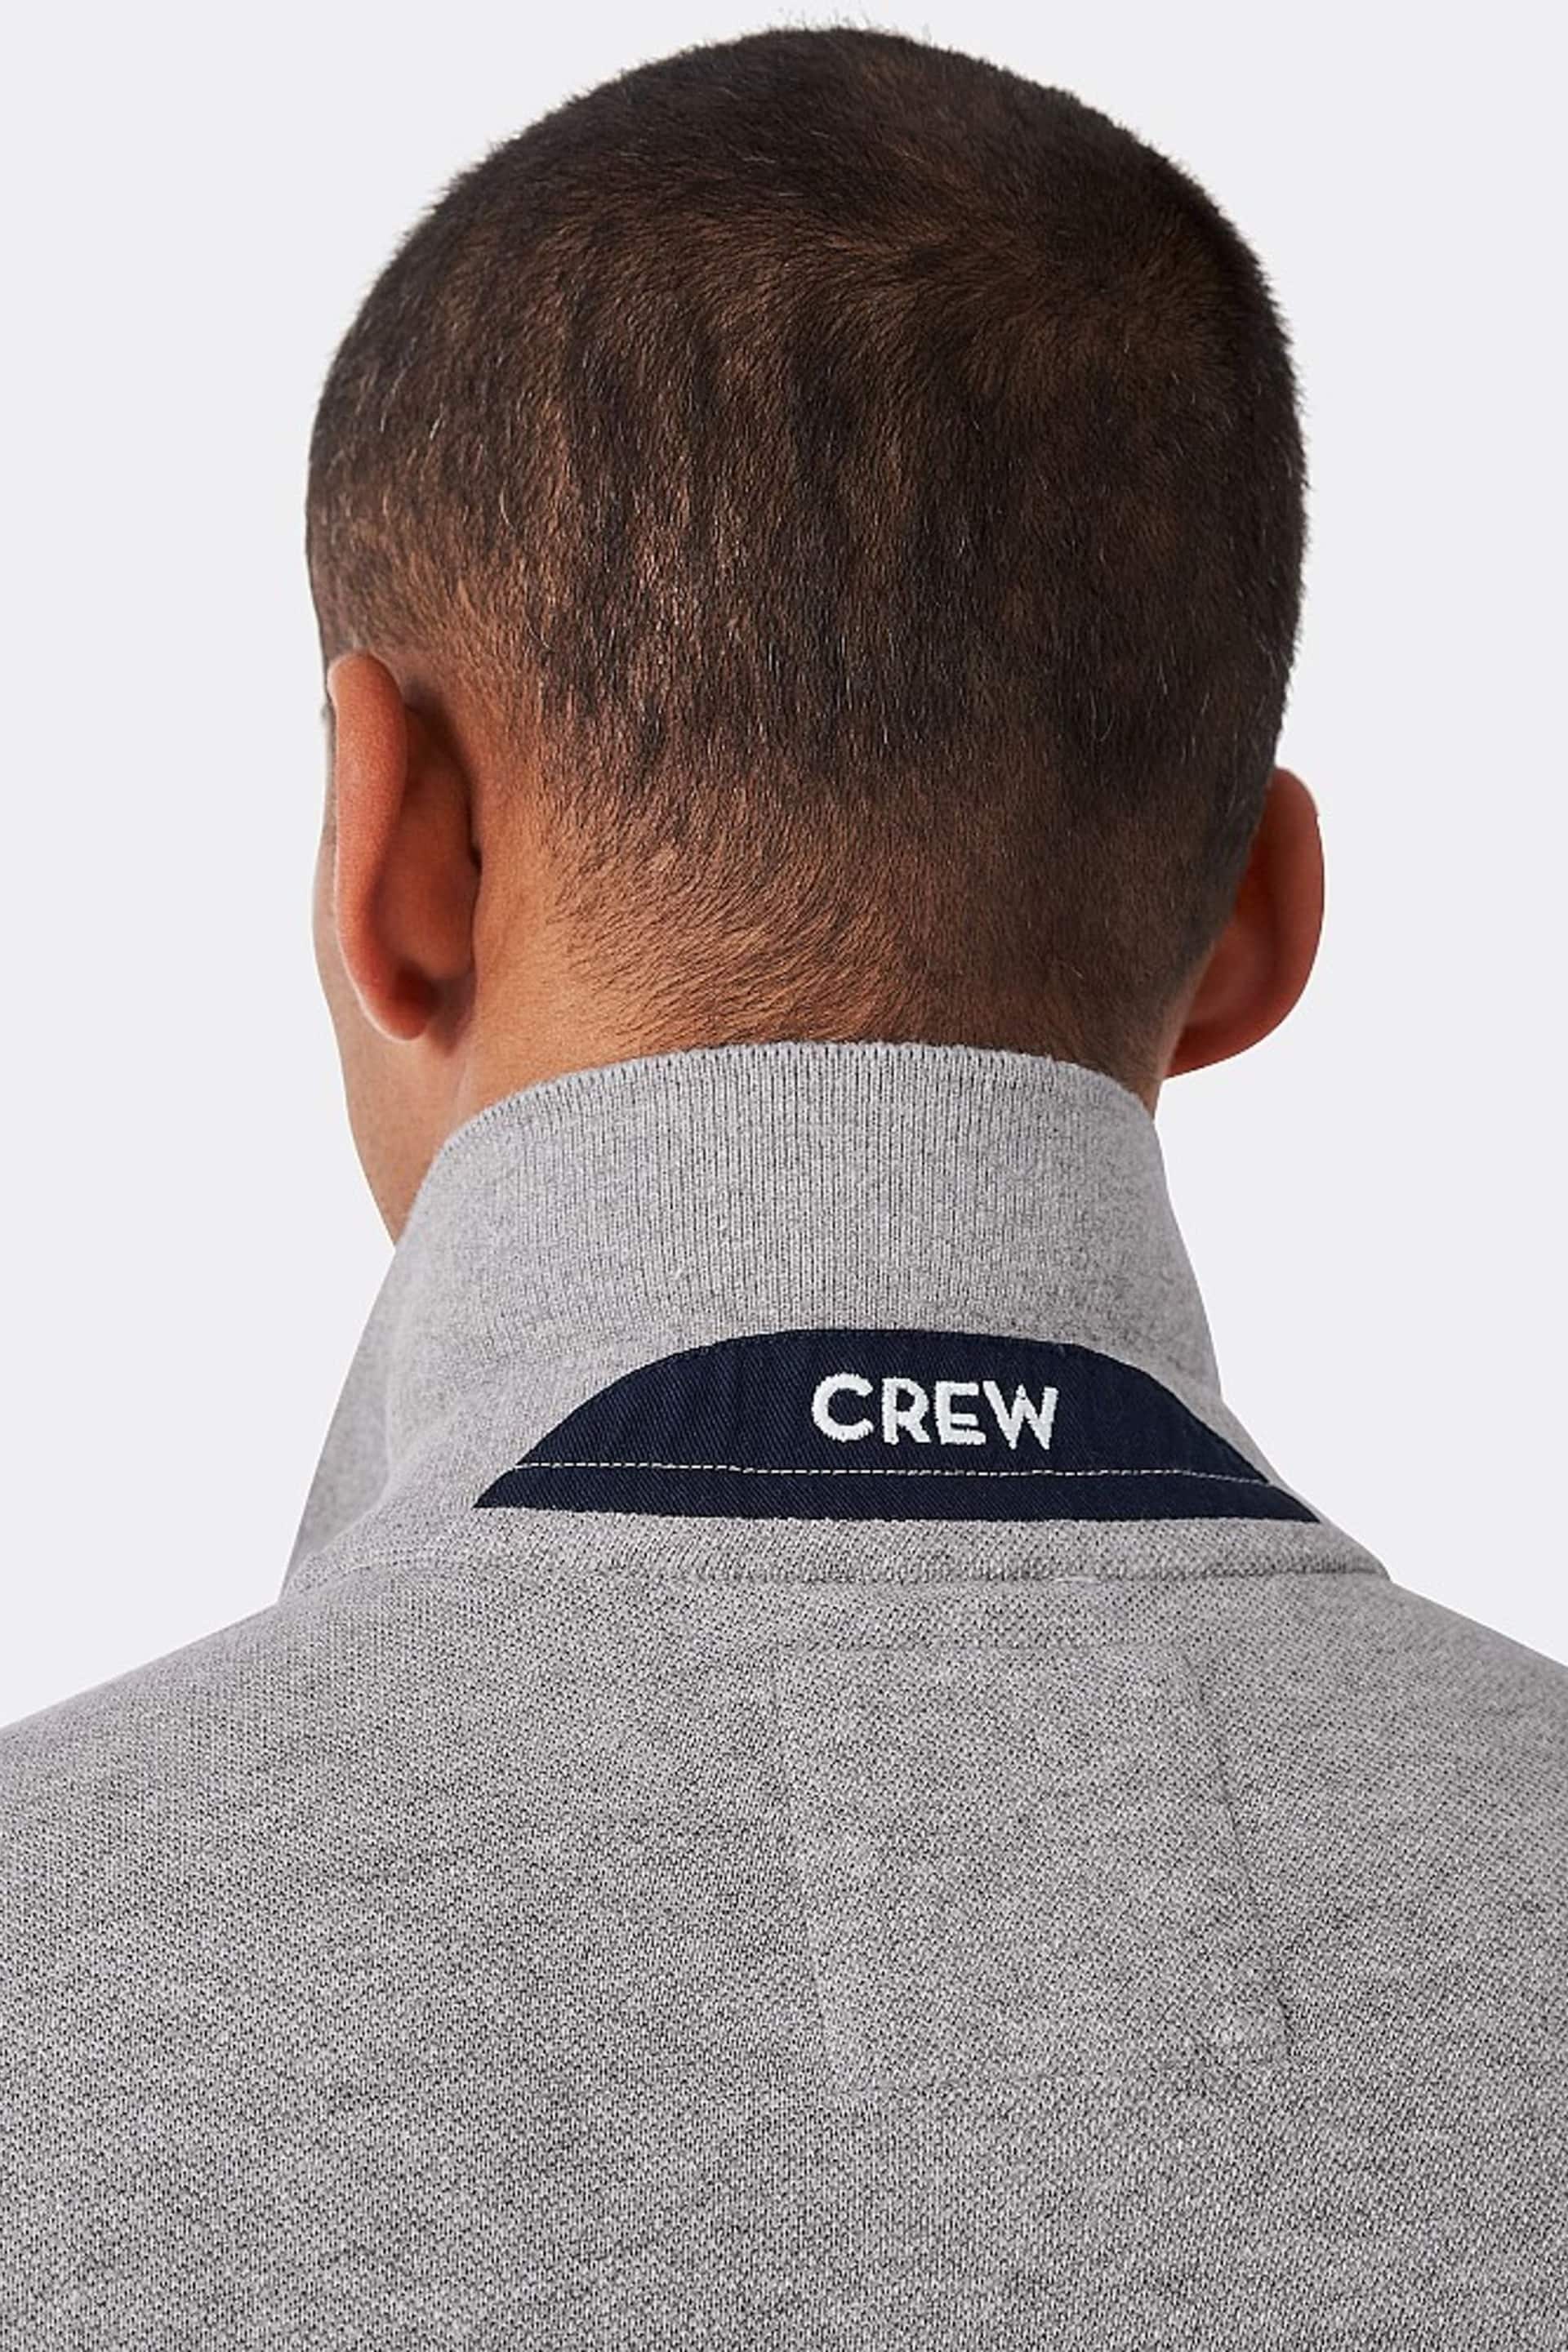 Crew Clothing Cotton Pique Polo Shirt - Image 4 of 5